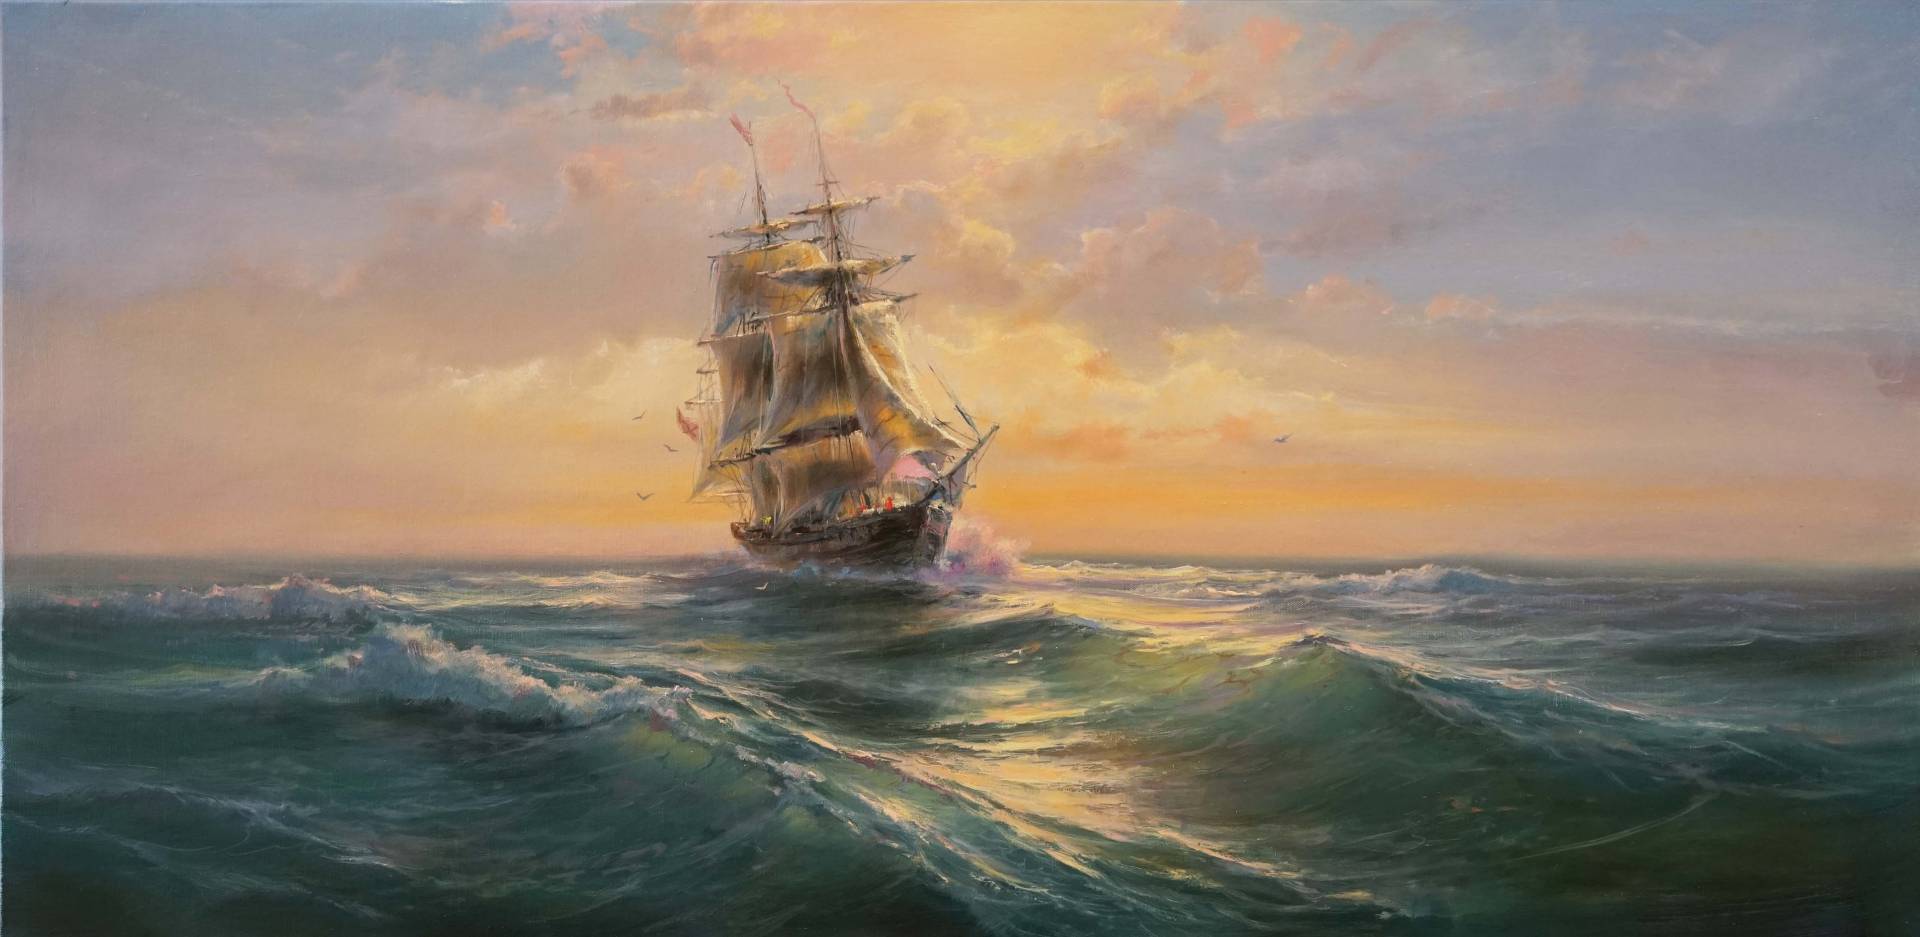 On the Waves, Dmitry Balakhonov, Buy the painting Oil